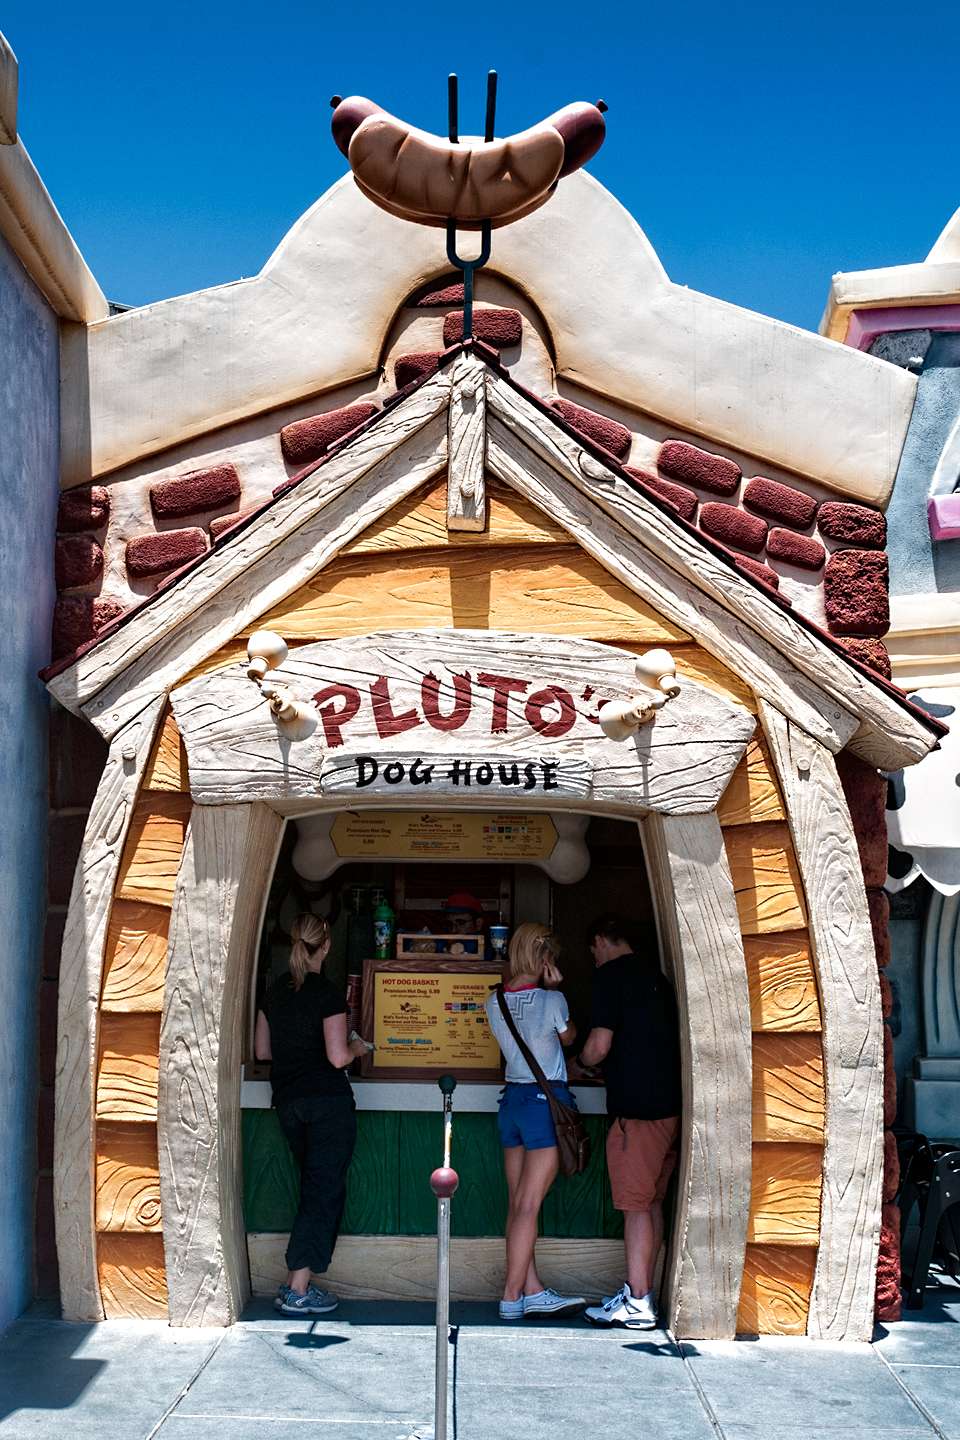 Plutos Dog House | 1313 S Harbor Blvd, Anaheim, CA 92802 | Phone: (714) 781-3463